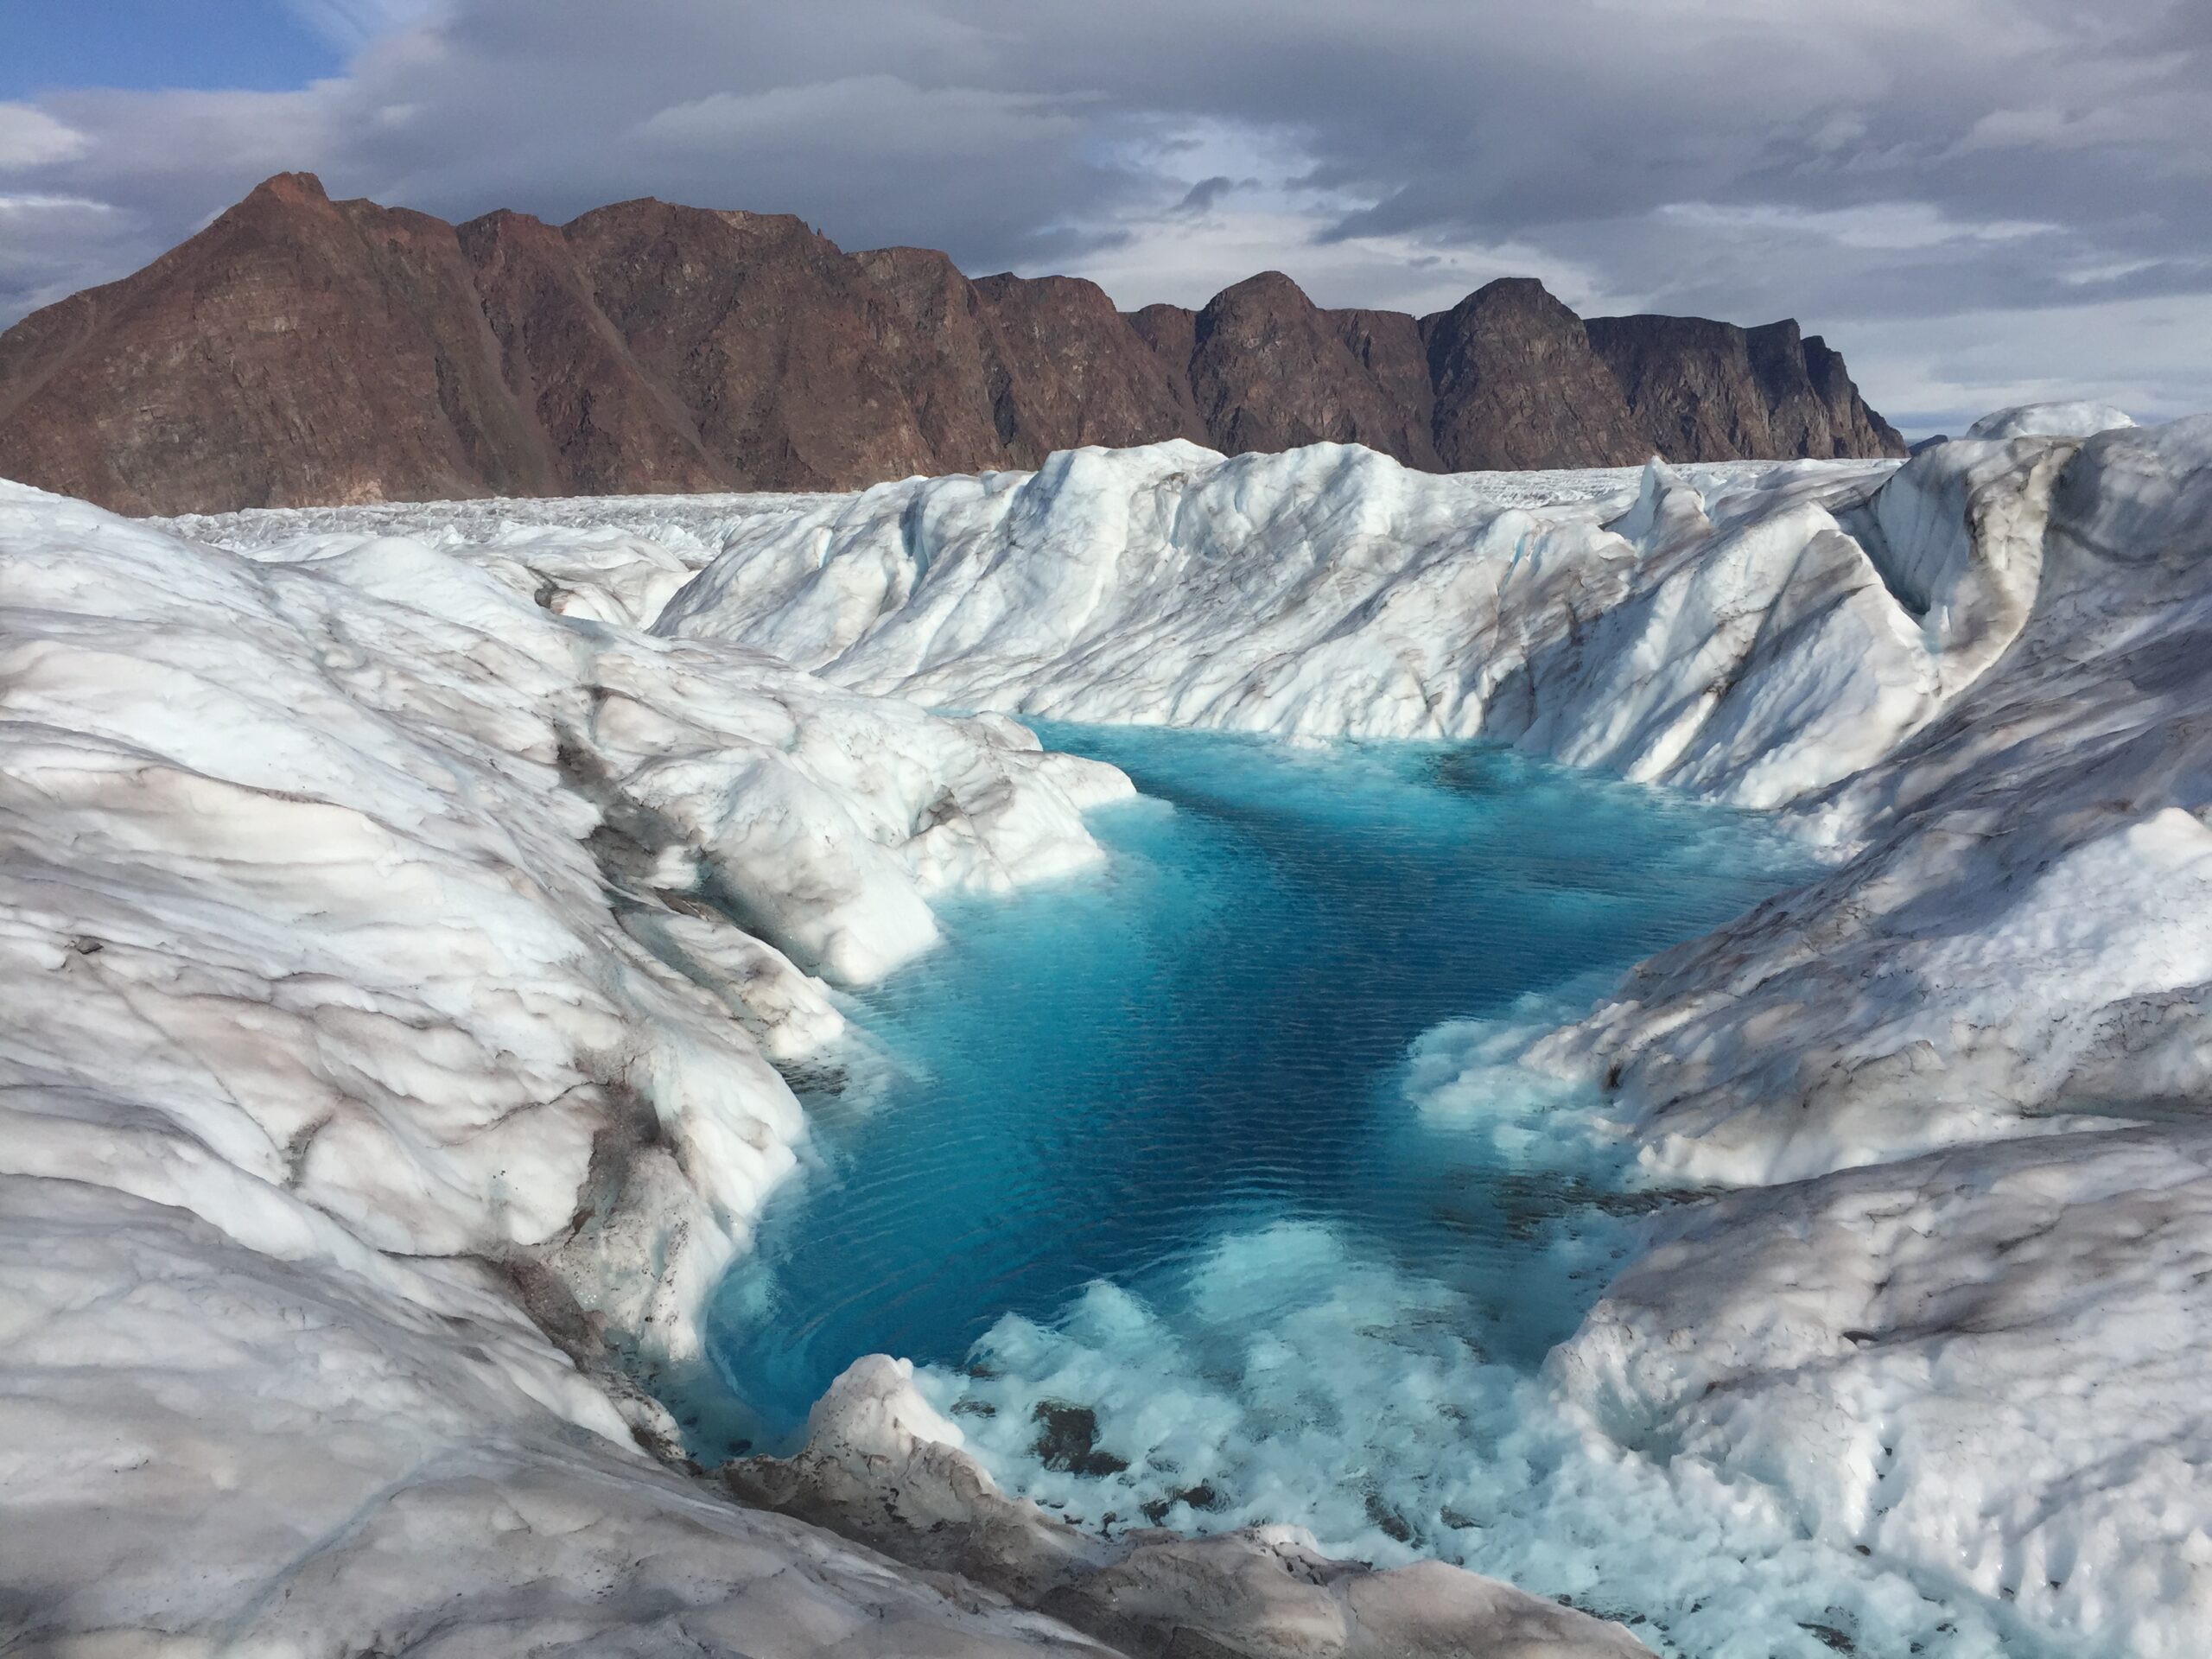 Water-filled crevasse at Bowdoin Glacier, Greenland (Photo by Evgeny Podolskiy, 2019).